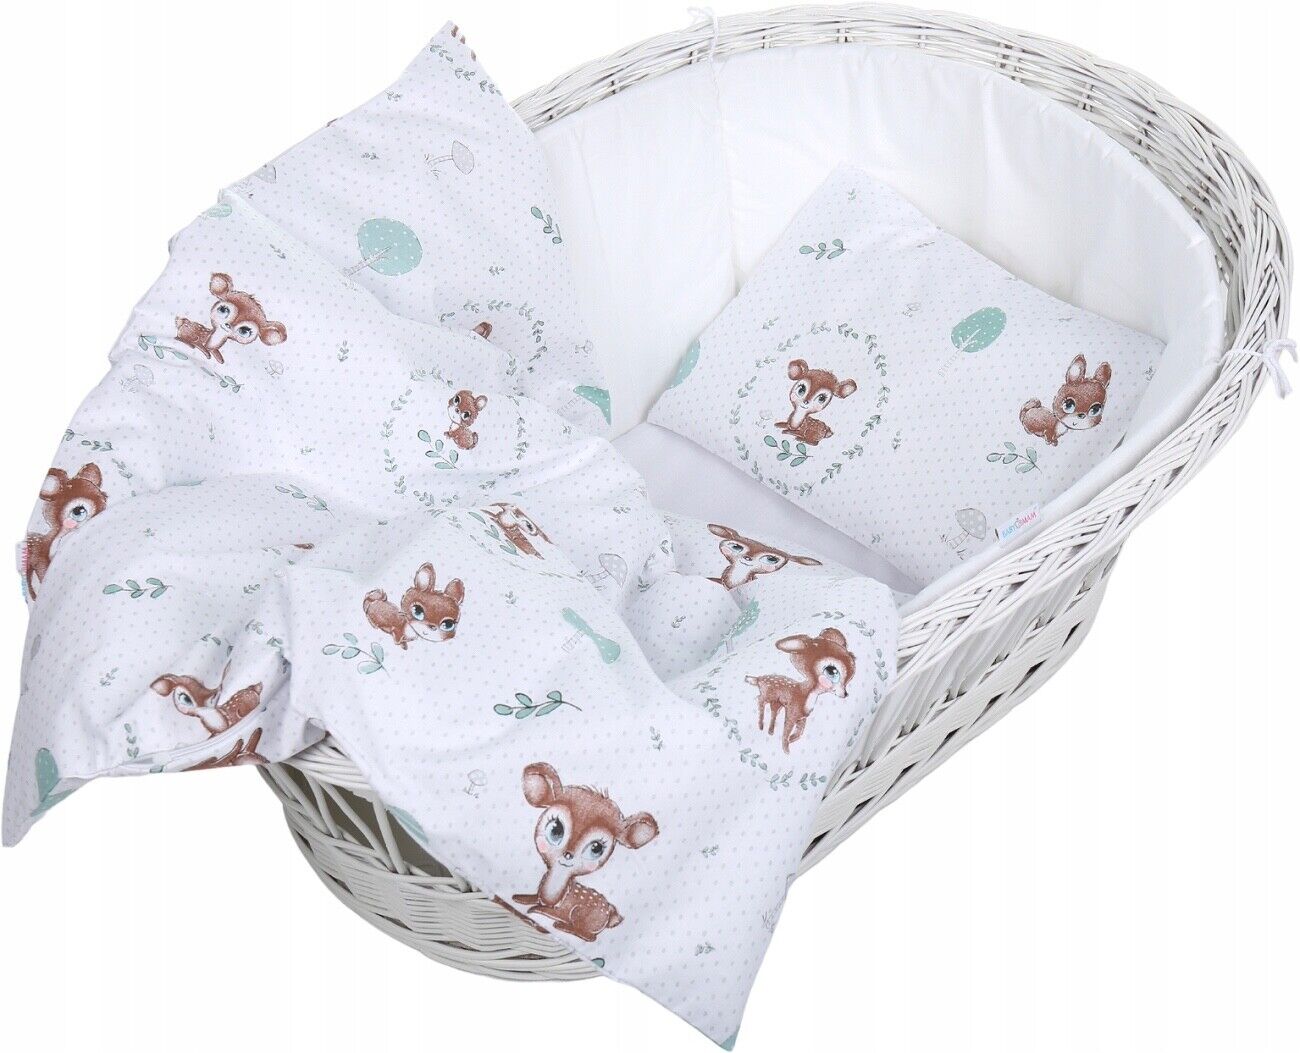 Baby bedding set 6pc 70x80 fit crib bumper pillow duvet sheet Fairy-tale Forest